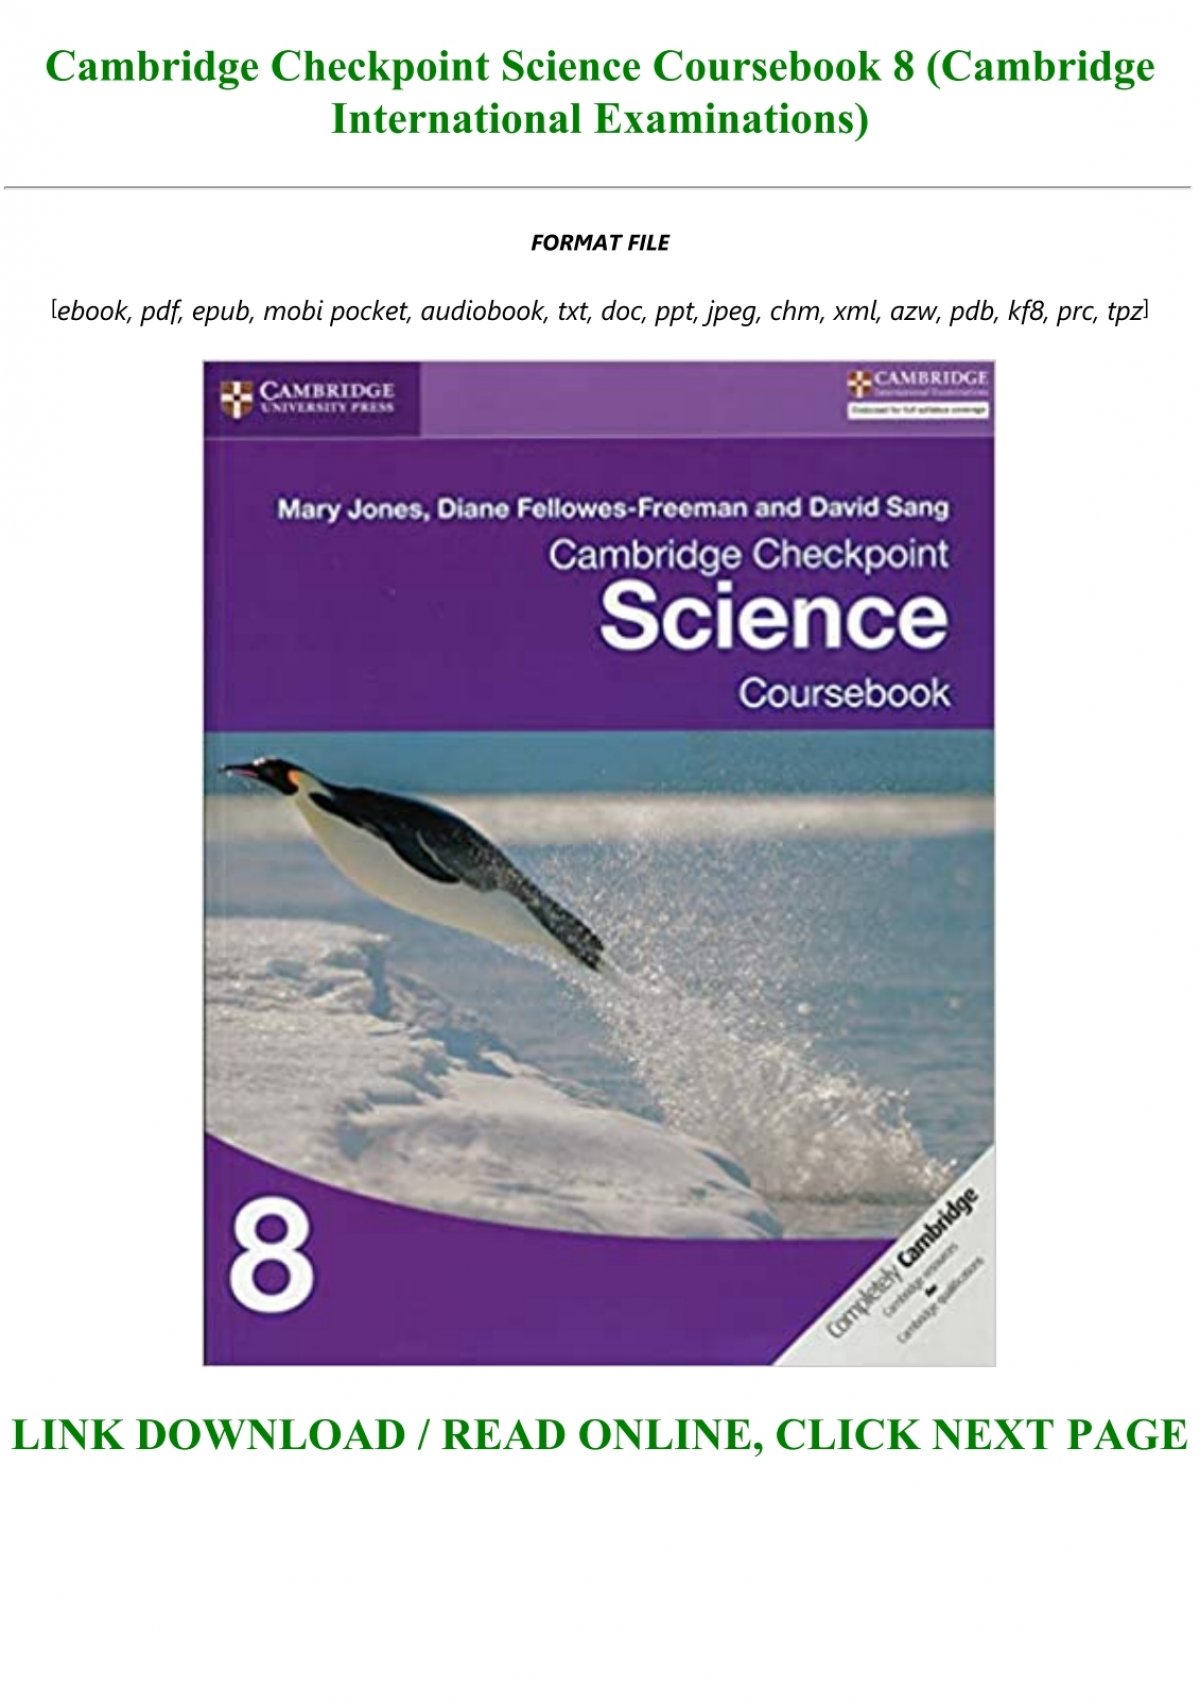 [DOWNLOAD $PDF$] Cambridge Checkpoint Science Coursebook 8 (Cambridge